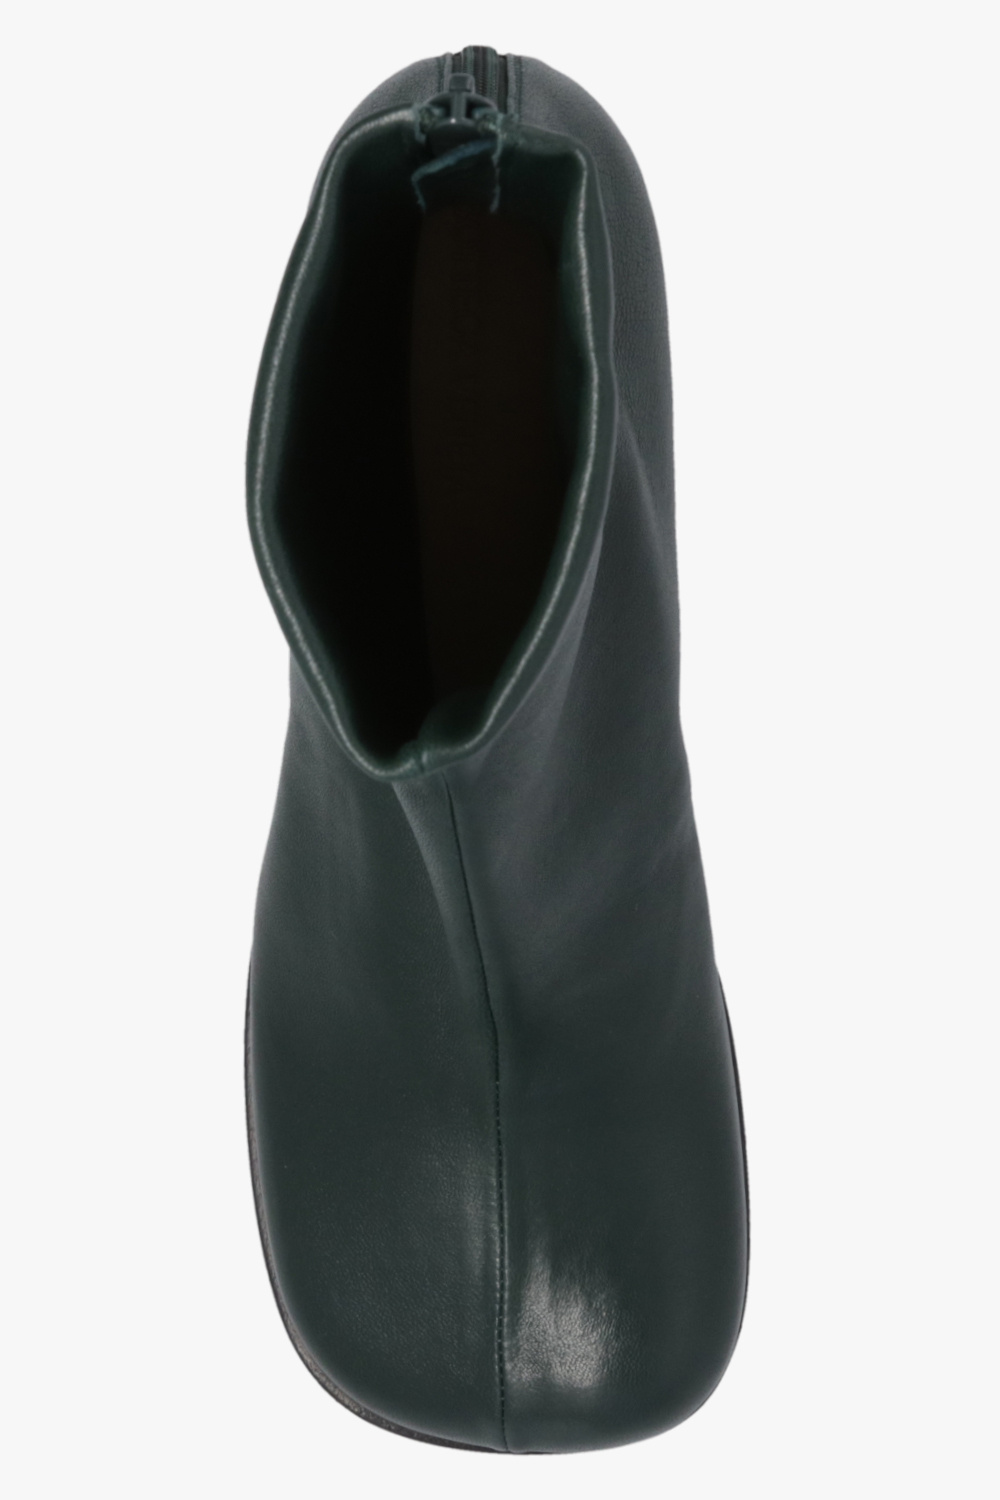 Bottega Veneta ‘Block’ heeled ankle boots